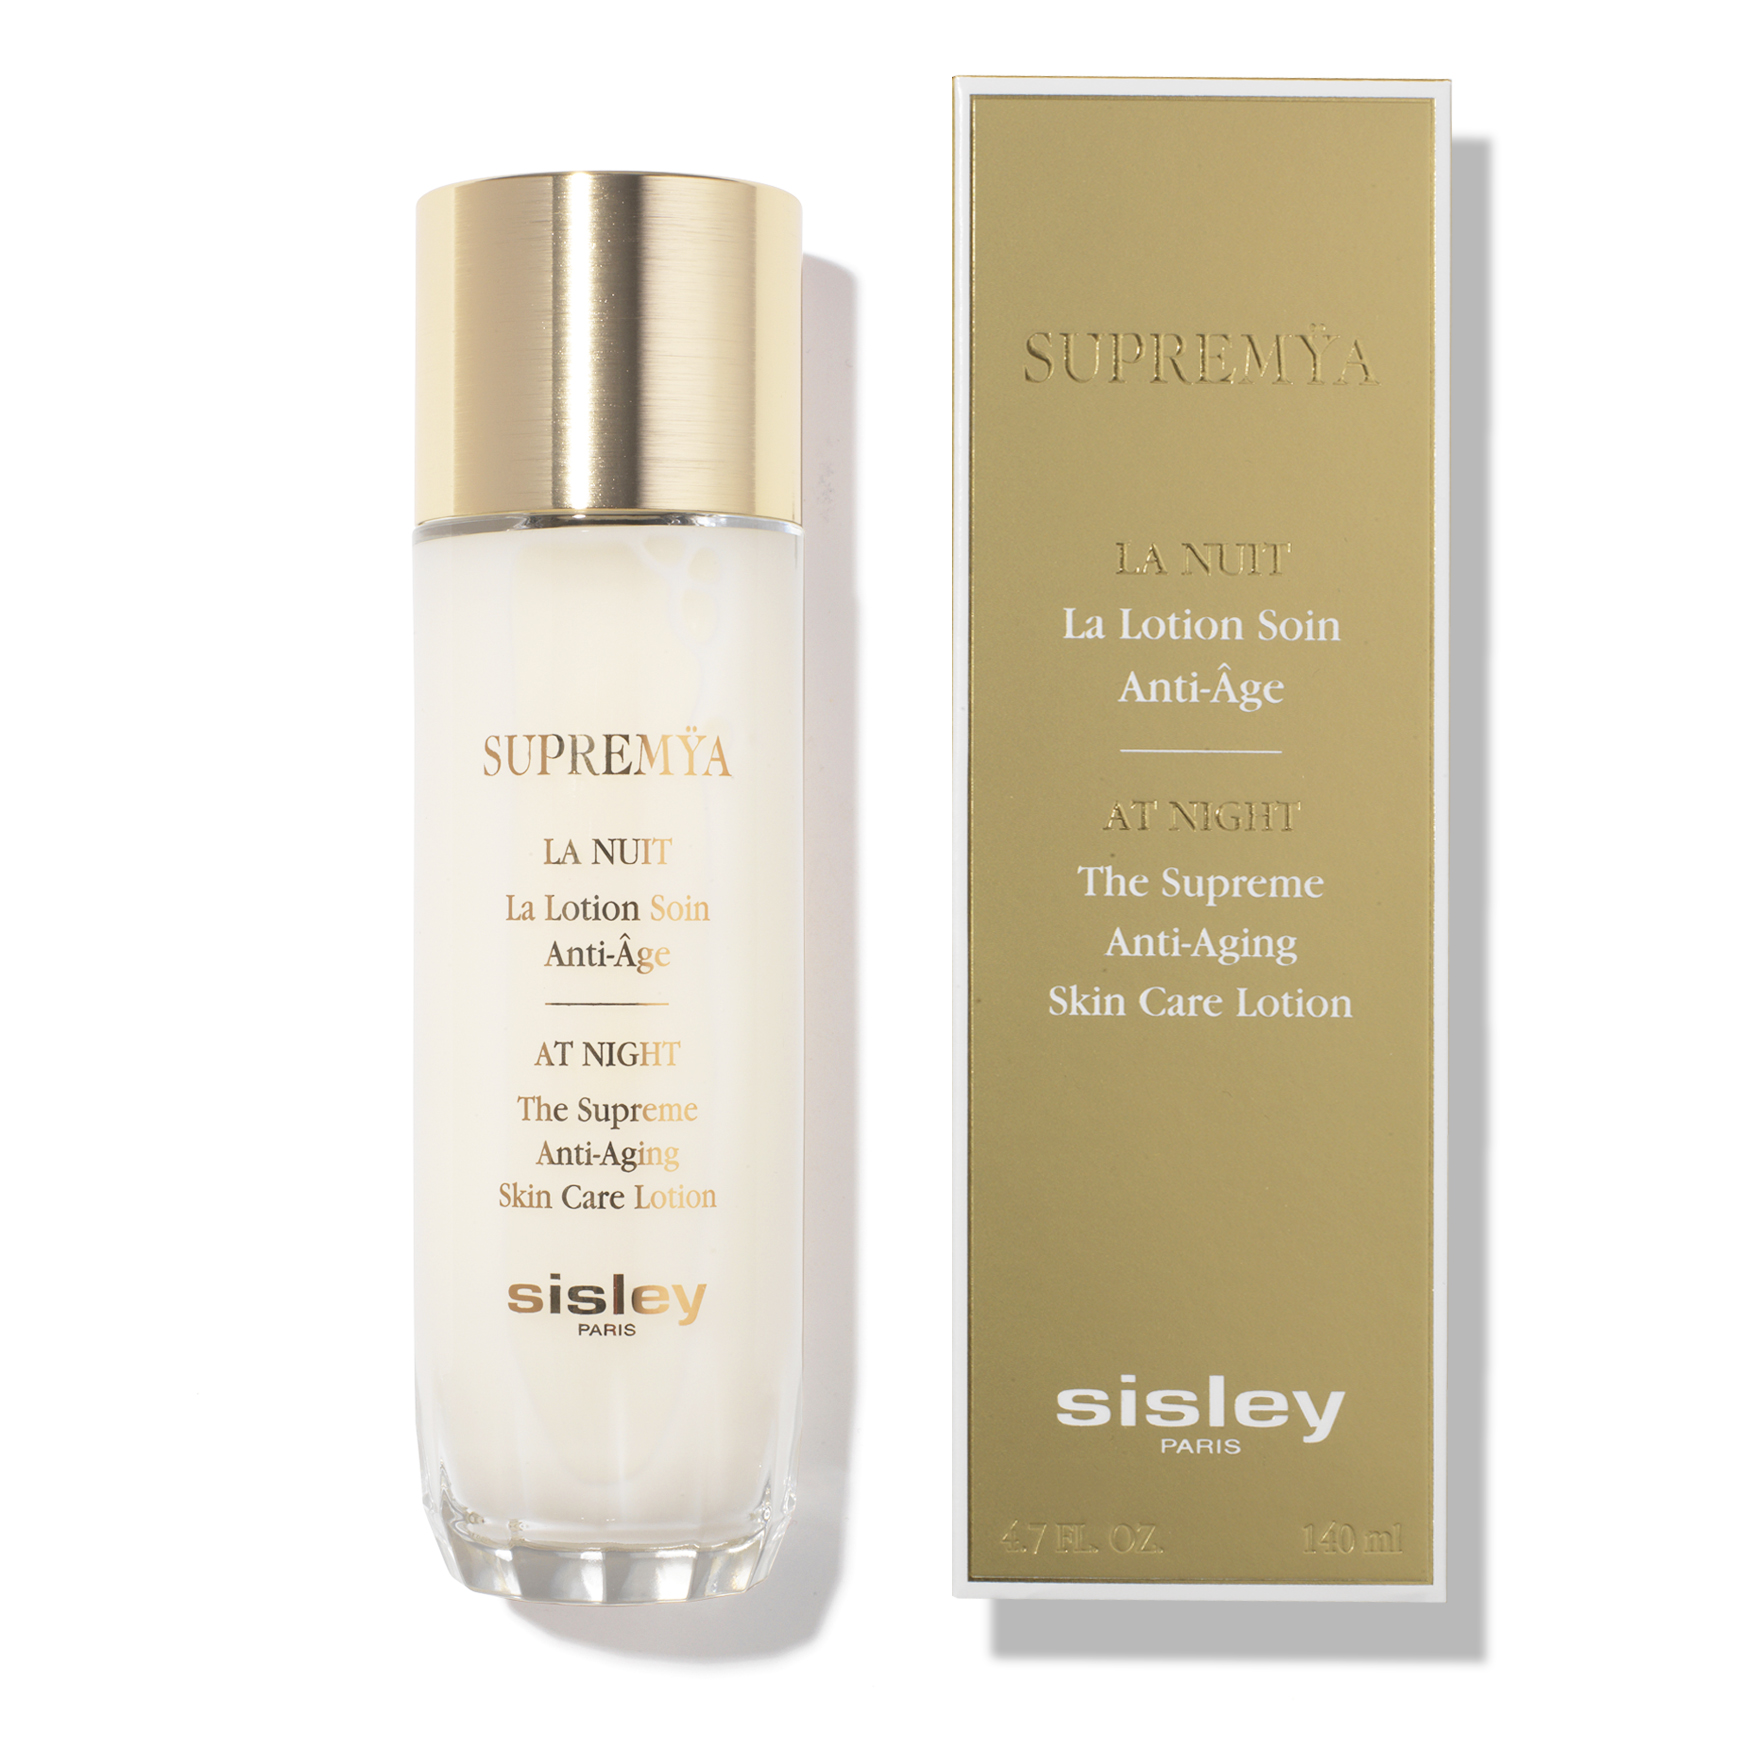 Sisley-Paris Supremya At Night The Supreme Anti-Ageing Skin Care Lotion ( Lotion de soin anti-âge suprême) | Space NK